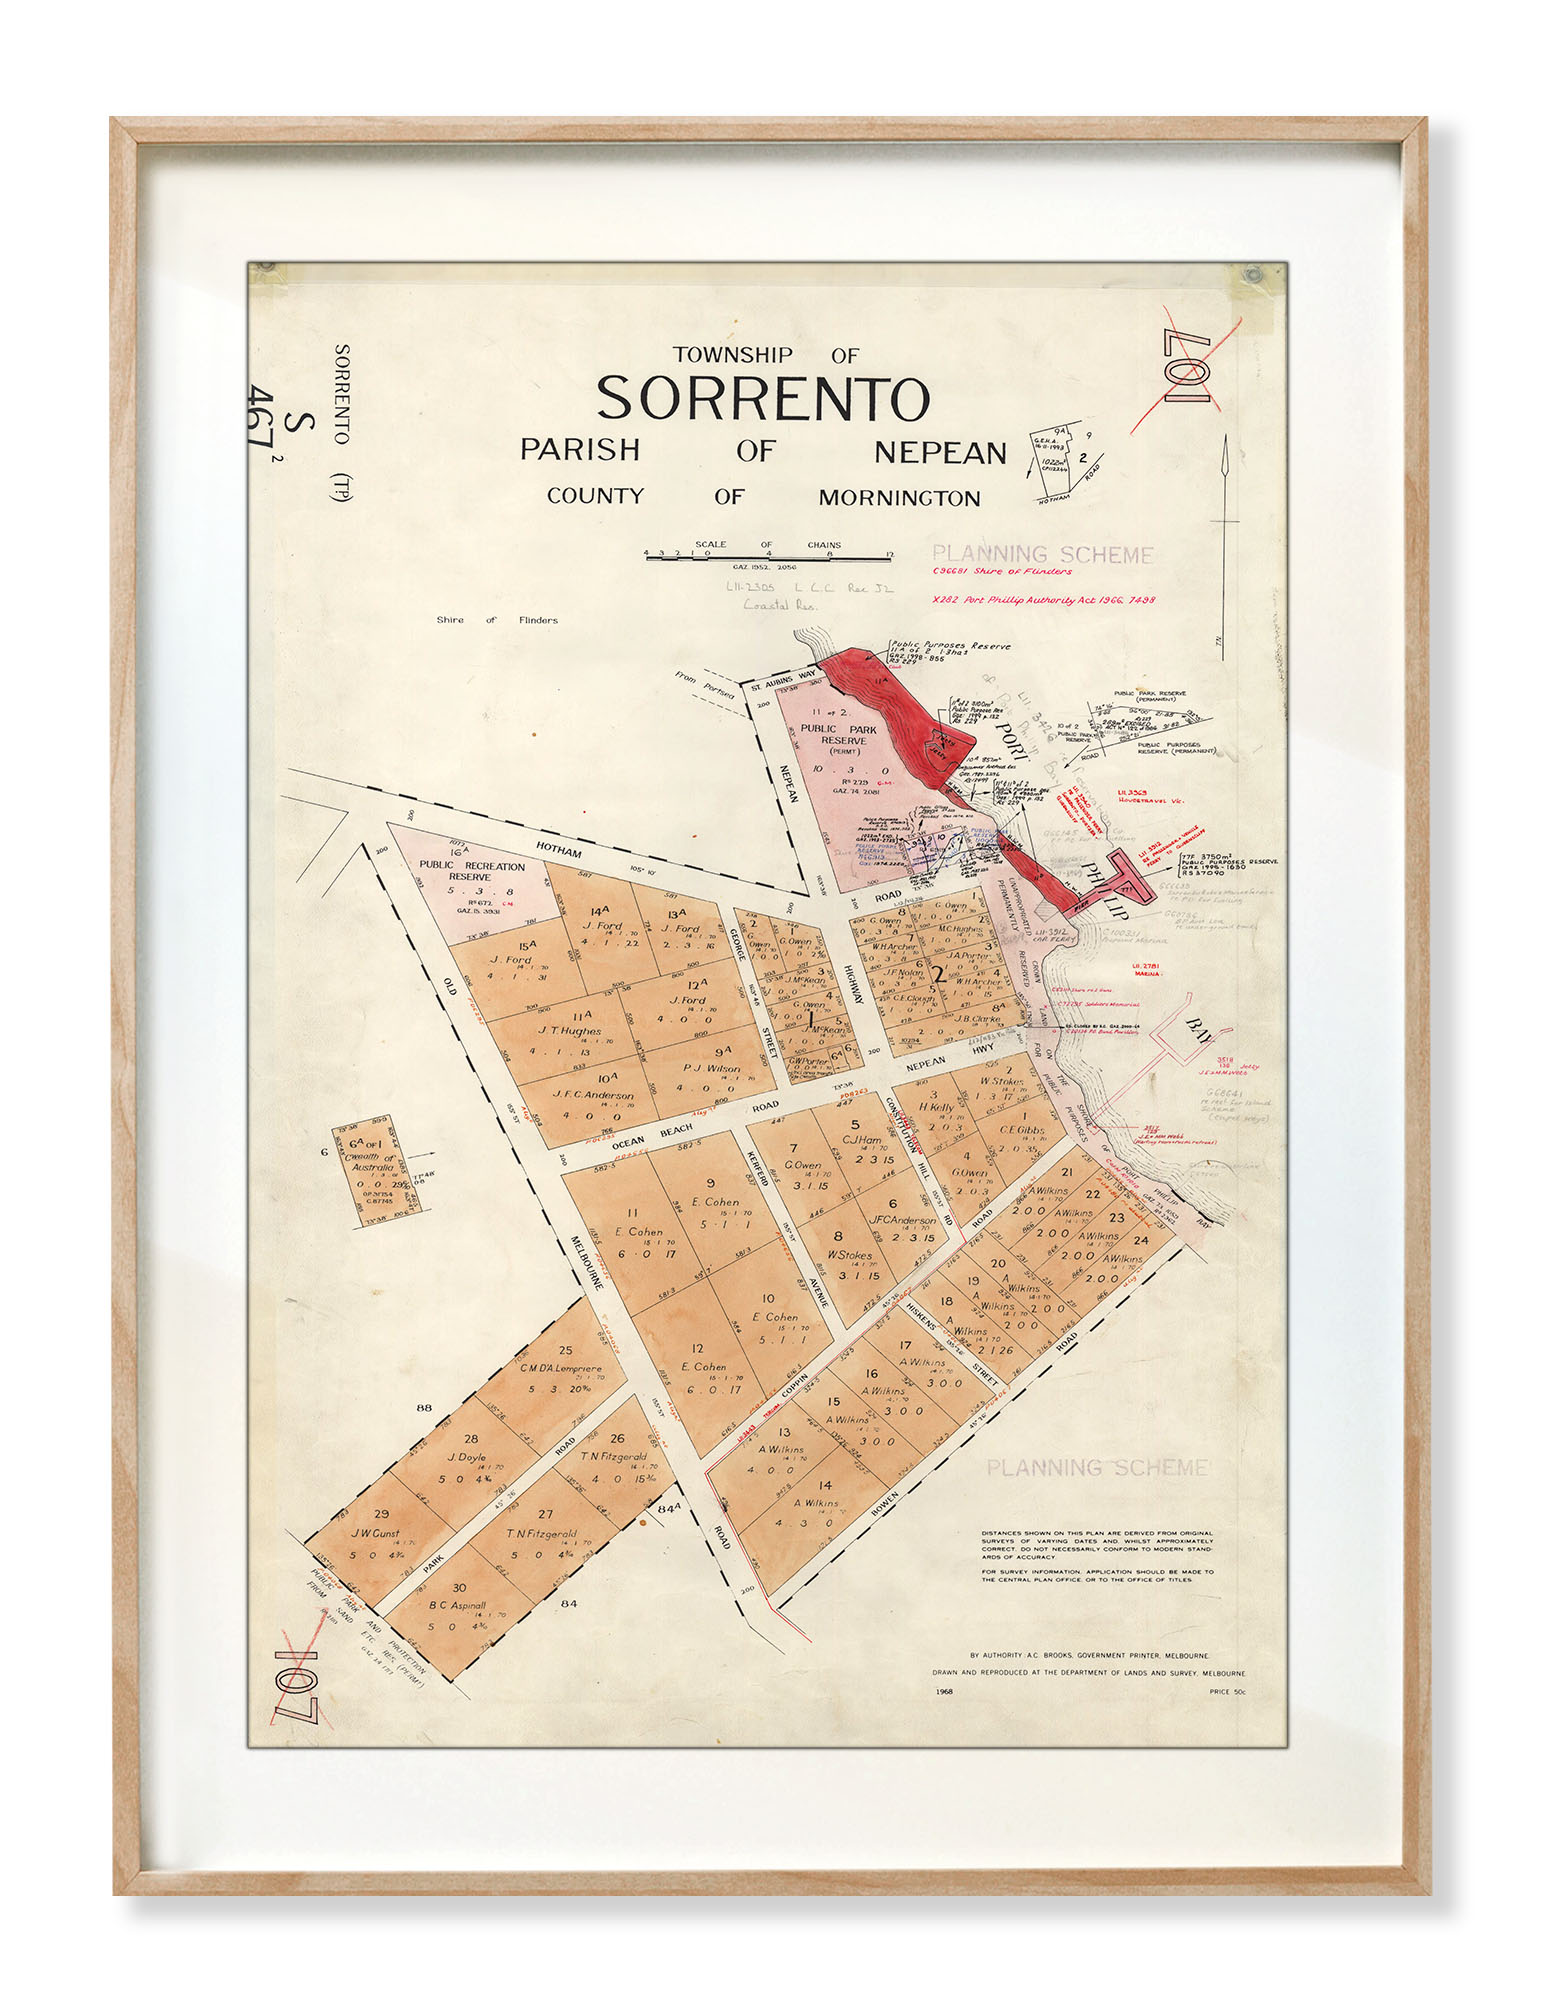 Township of Sorrento